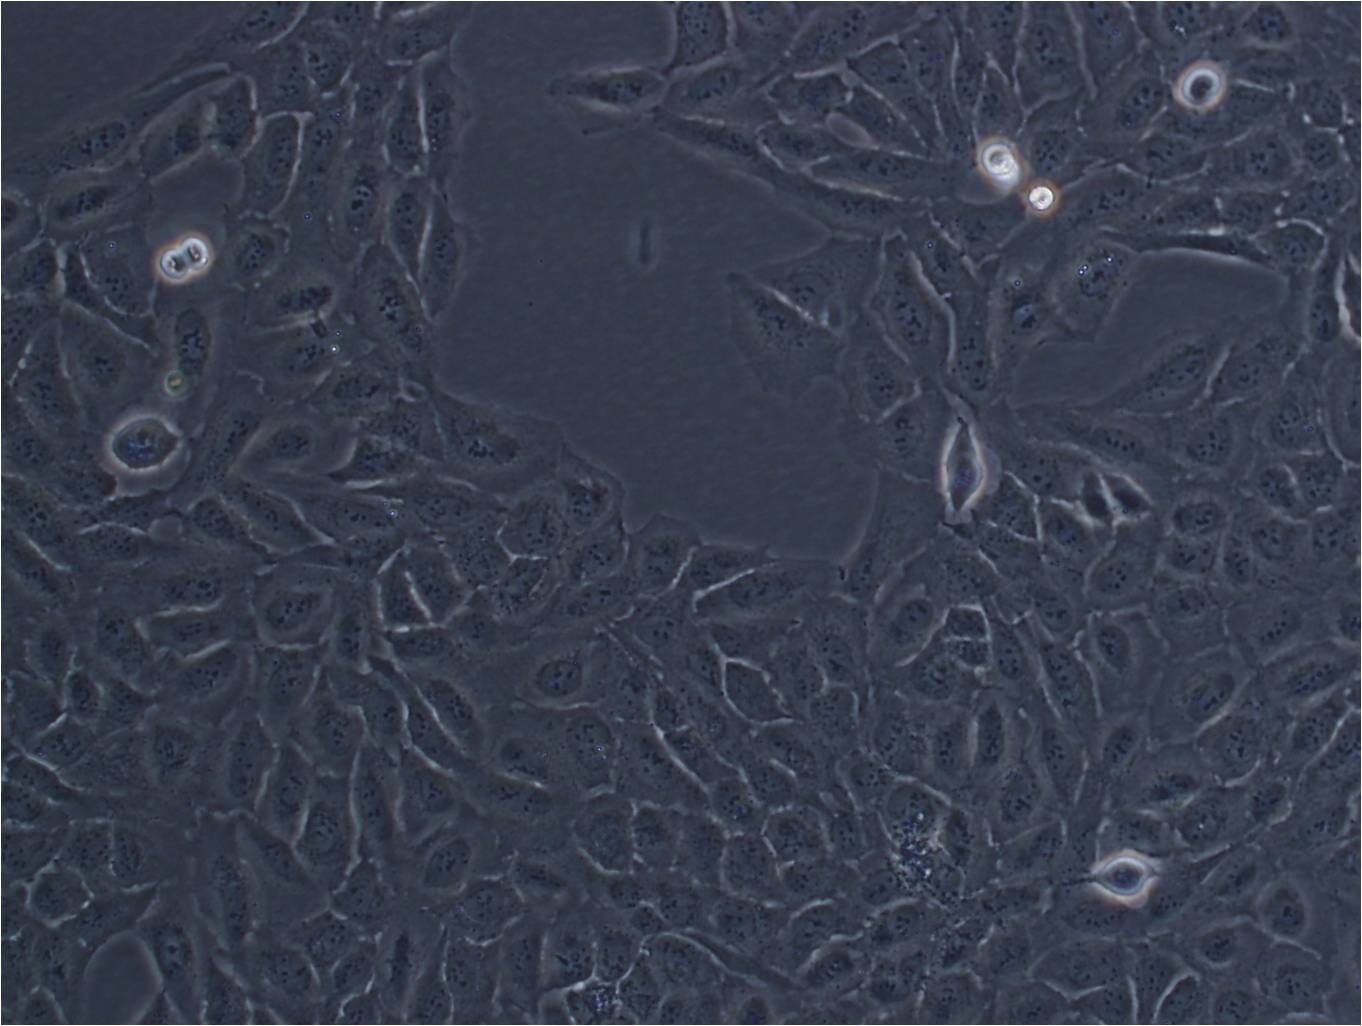 SNU-886 Cells(赠送Str鉴定报告)|人肝癌细胞,SNU-886 Cells